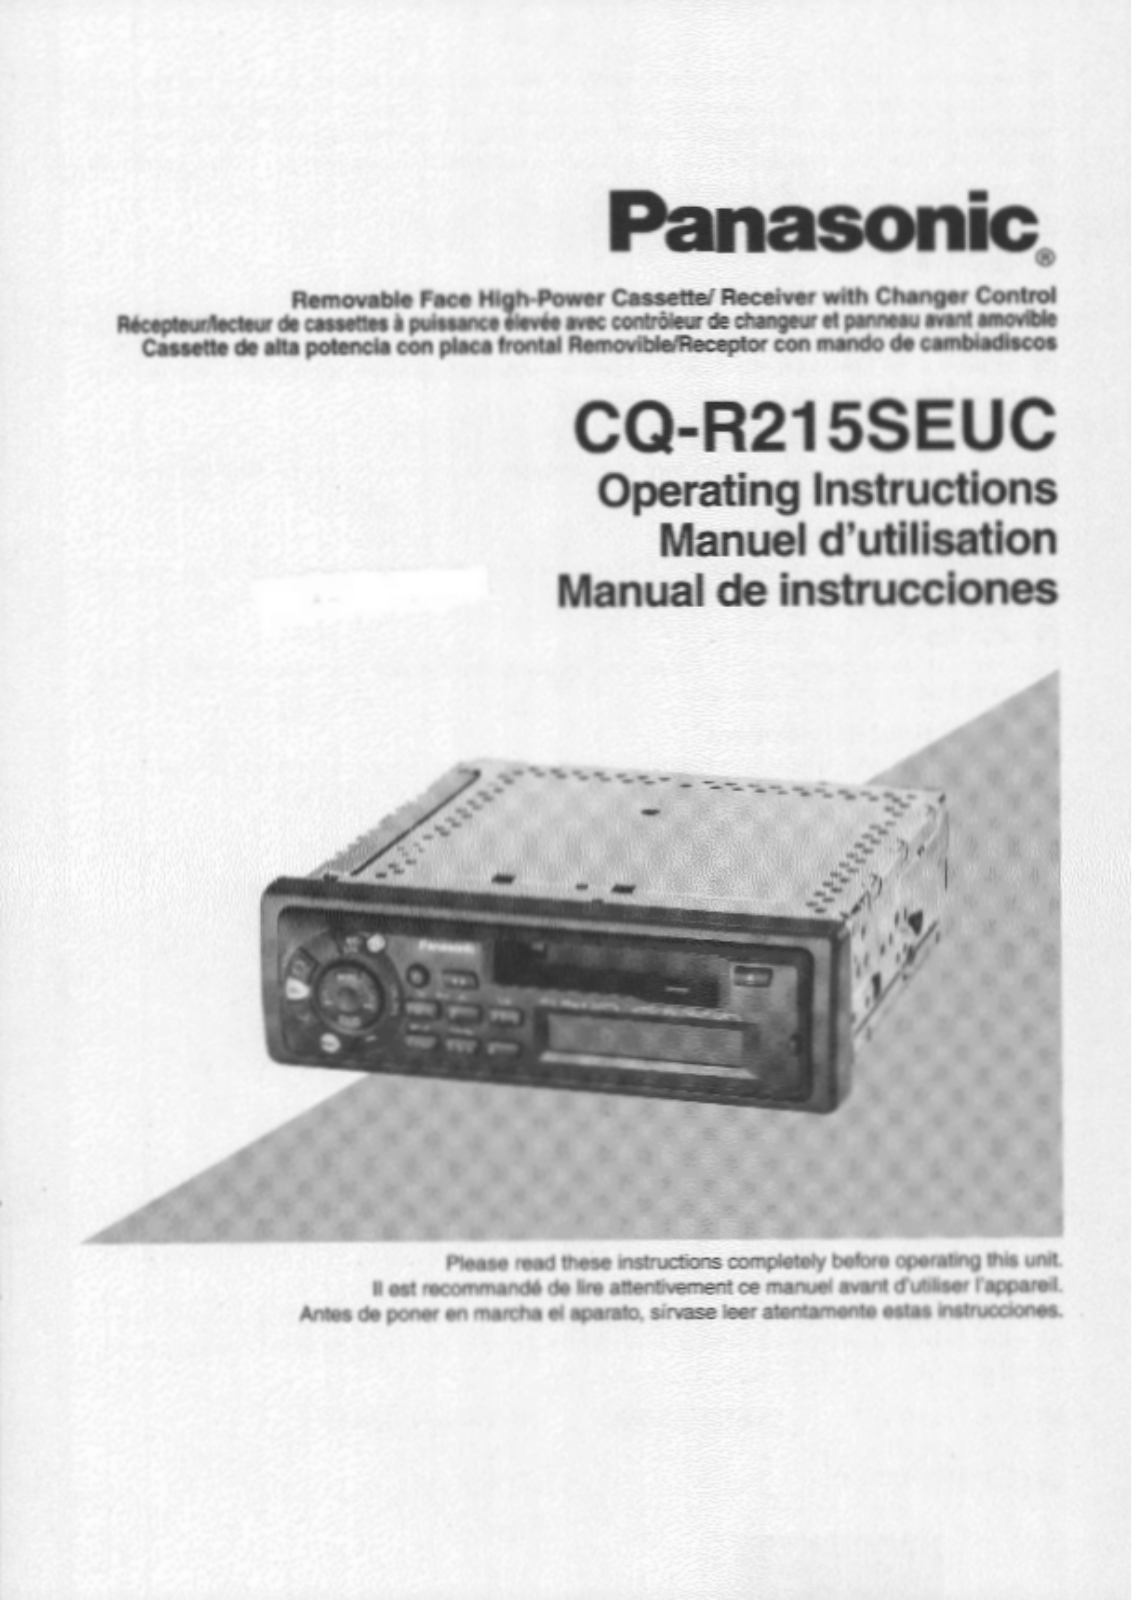 Panasonic cq-r215seuc Operation Manual